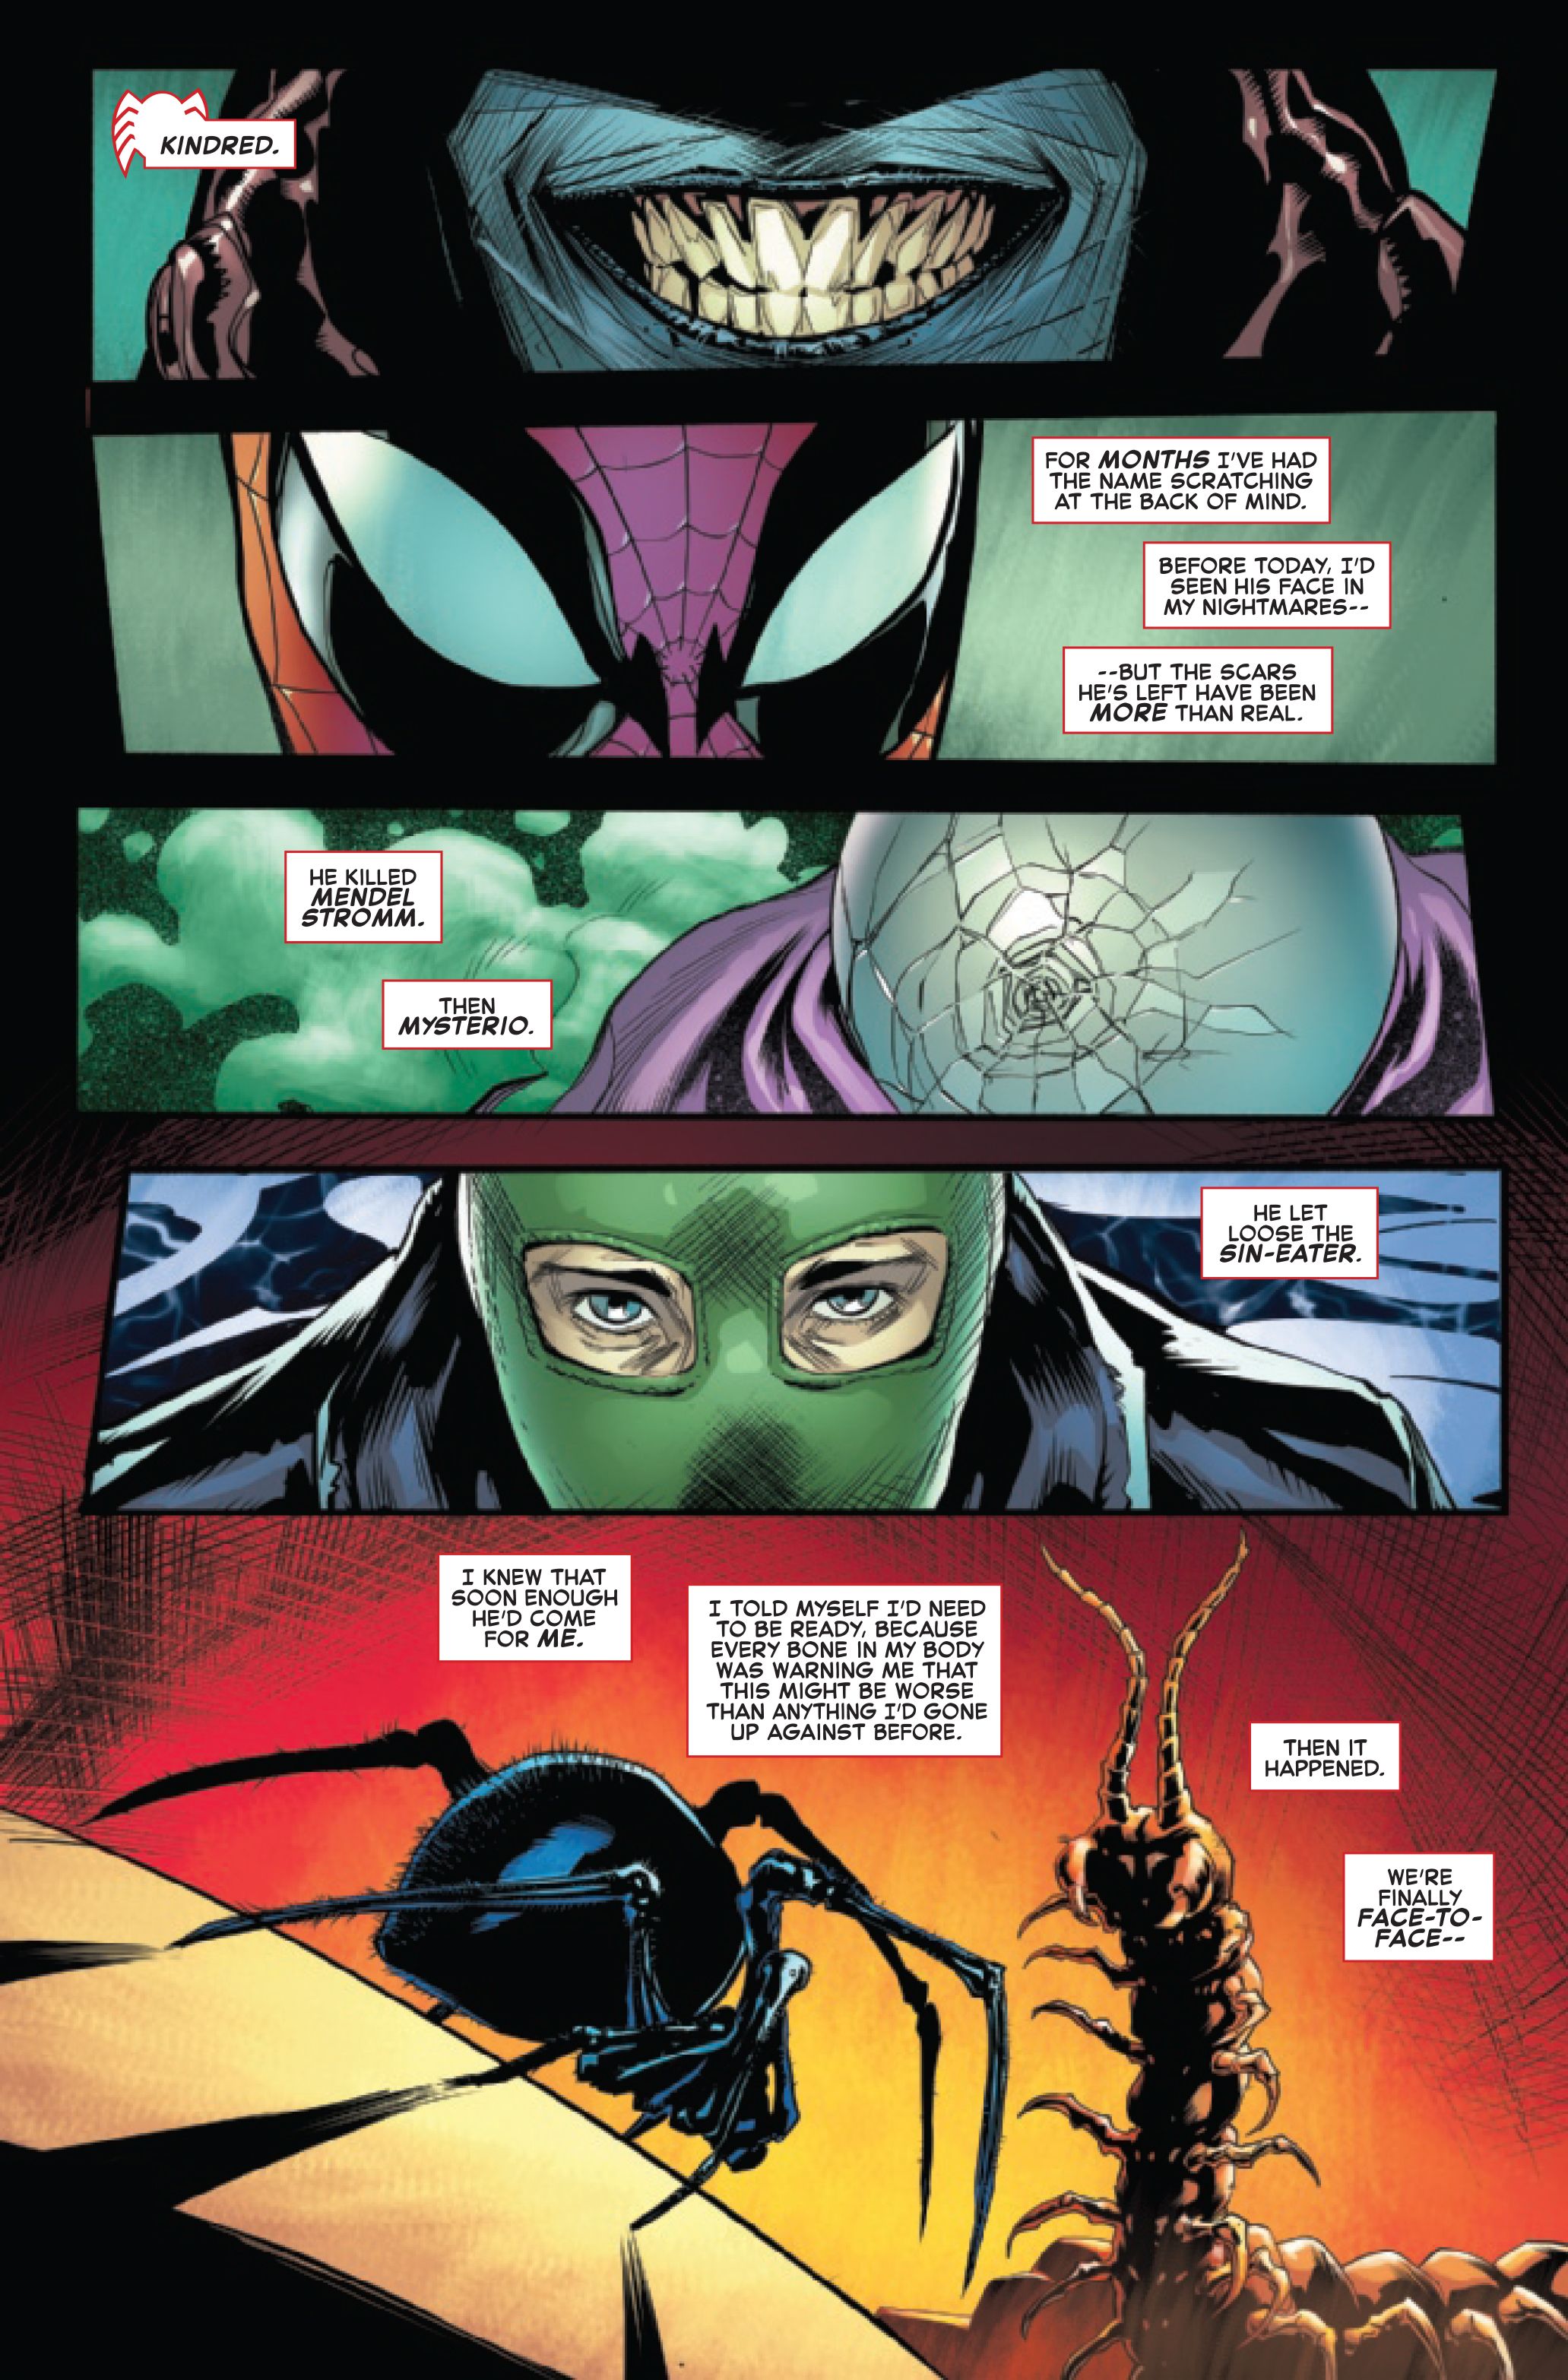 The Amazing Spider-Man #52, by Nick Spencer, Patrick Gleason, Edgar Delgado and VC's Joe Caramagna, page 2